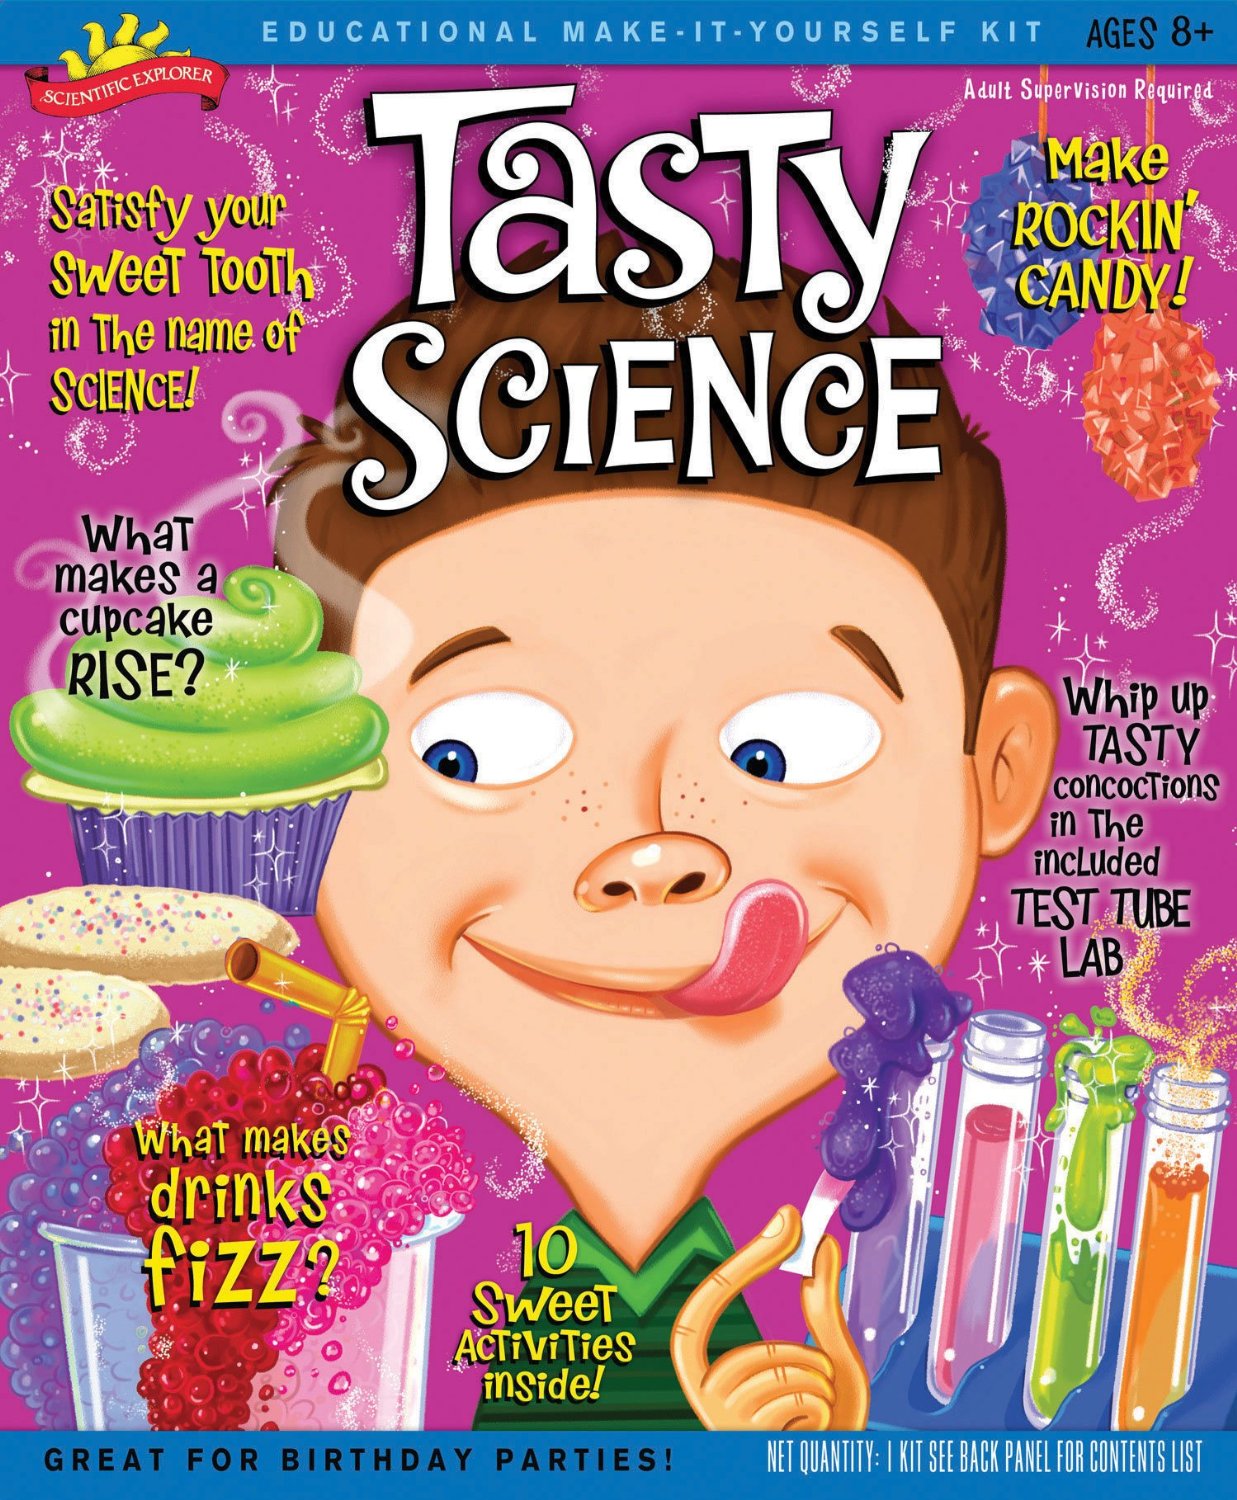 Scientific Explorer, Tasty Science Kit Only $8.00 (Reg. $19.99)